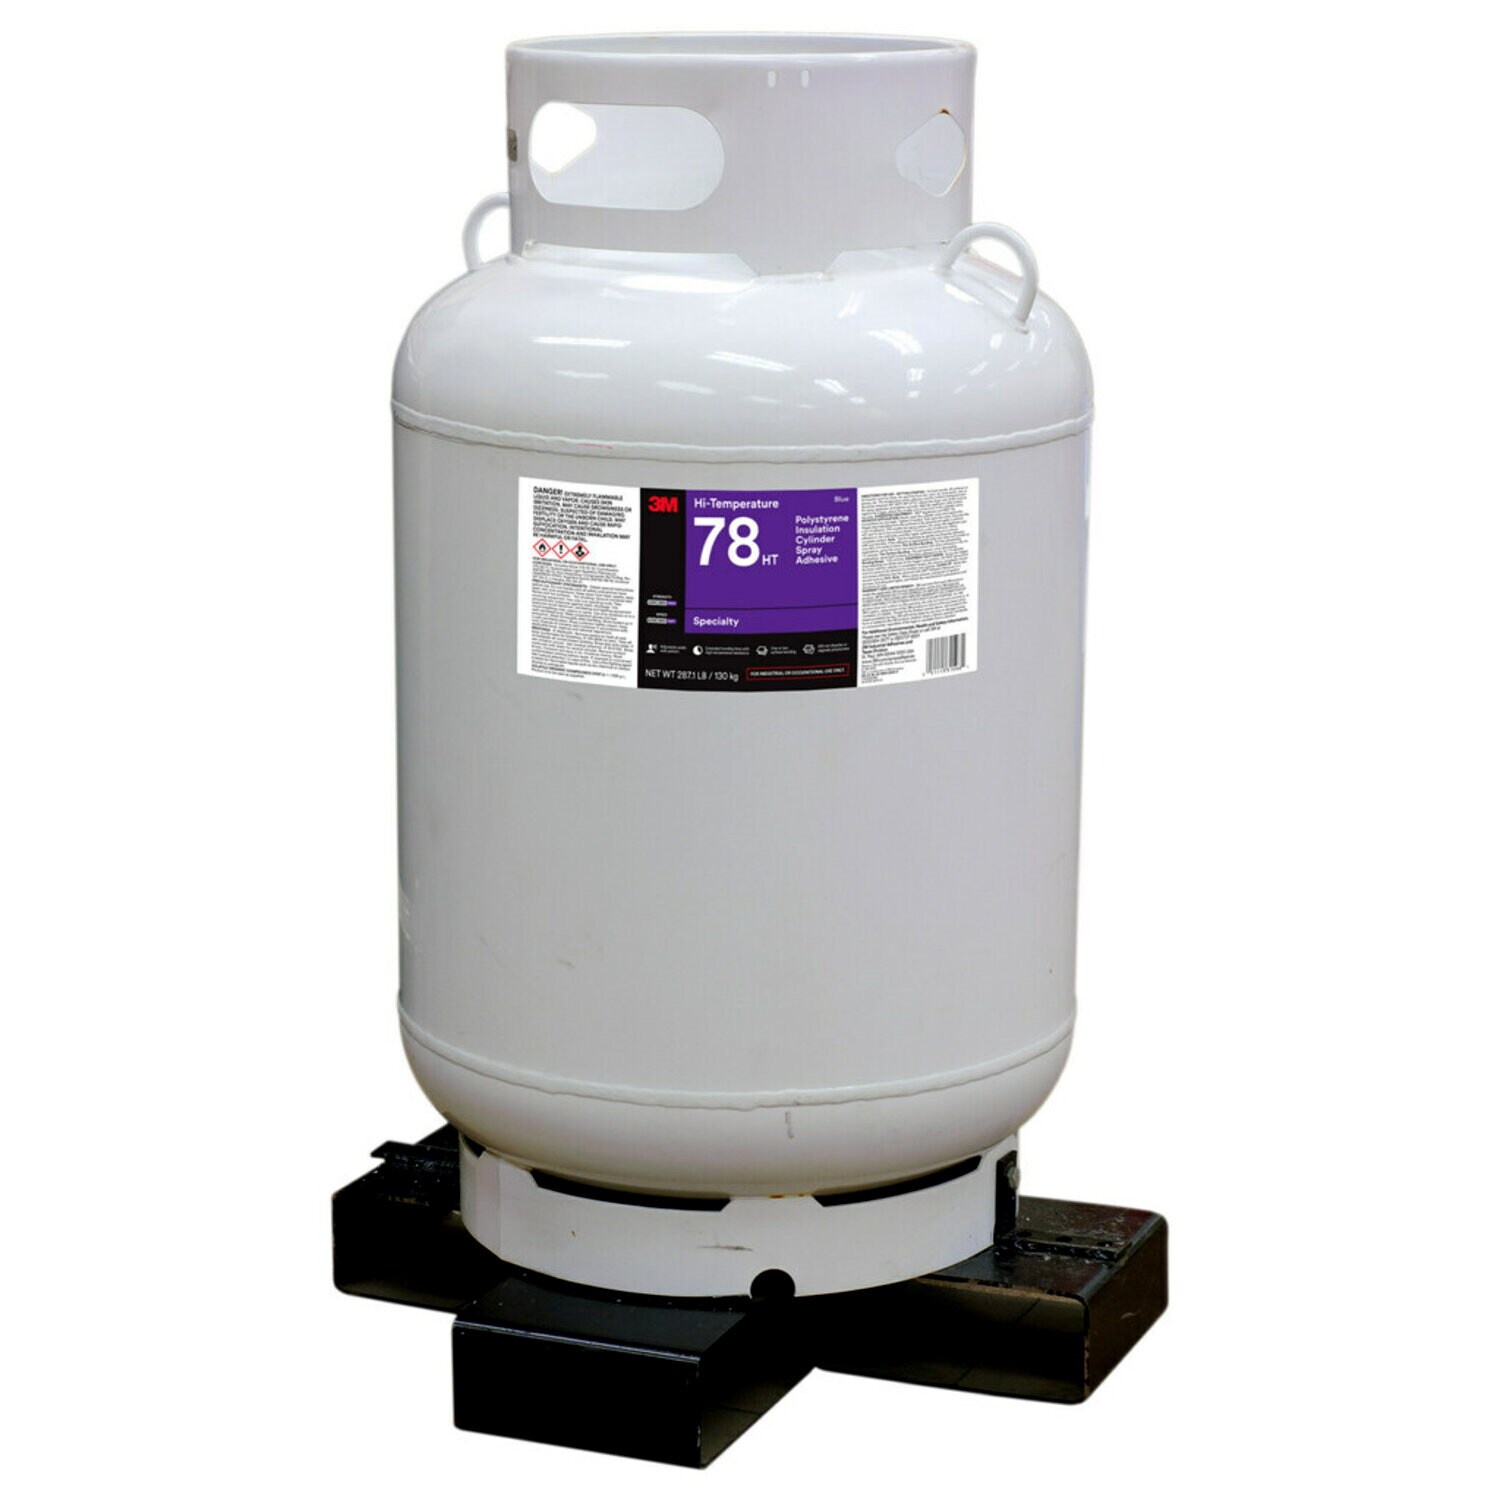 7100028366 - 3M Hi-Temperature Polystyrene Insulation 78 HT Cylinder Spray Adhesive,
Blue, Jumbo Cylinder (Net Wt 287.1 lb)